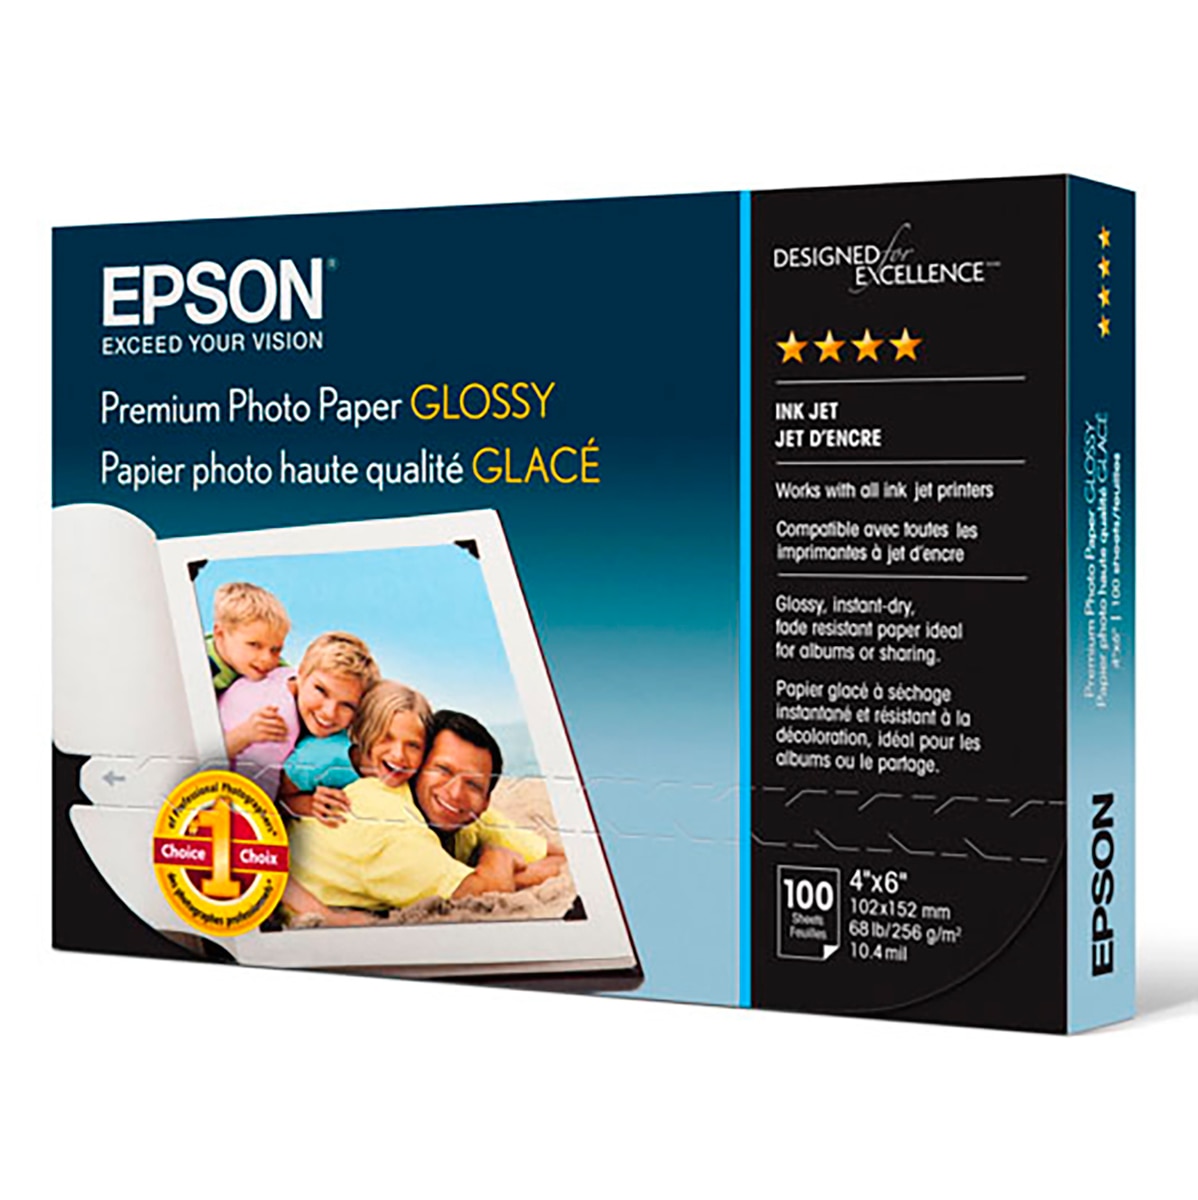 Epson papel fotográfico premium glossy